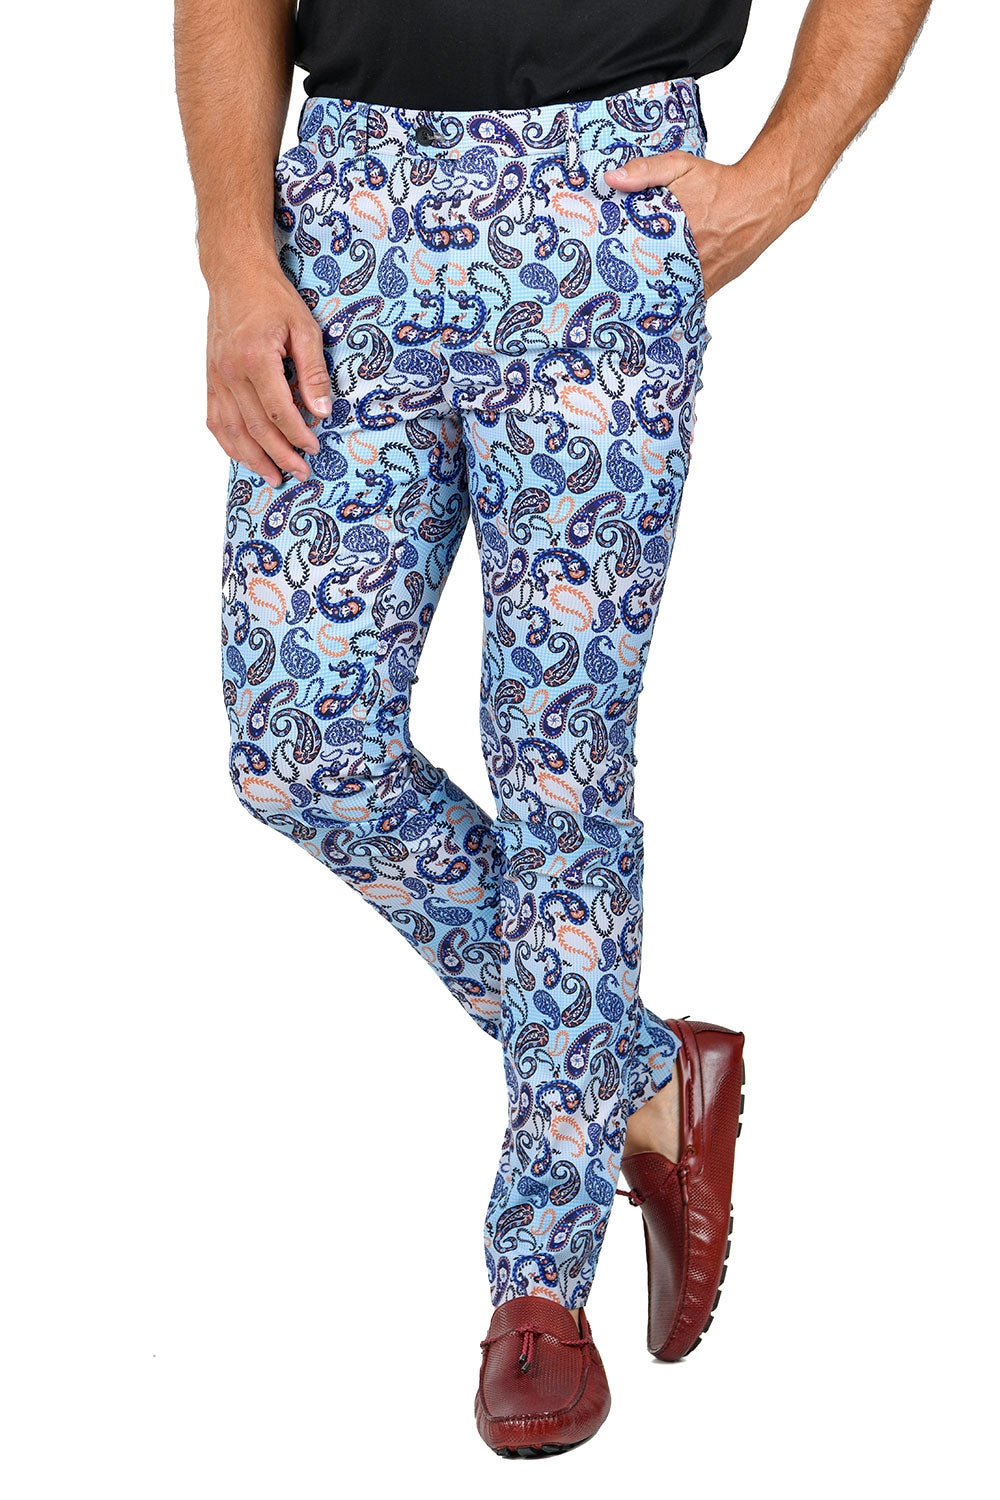 BARABAS Men's Paisley Design Classic Casual Chino Pants CP113 Blue